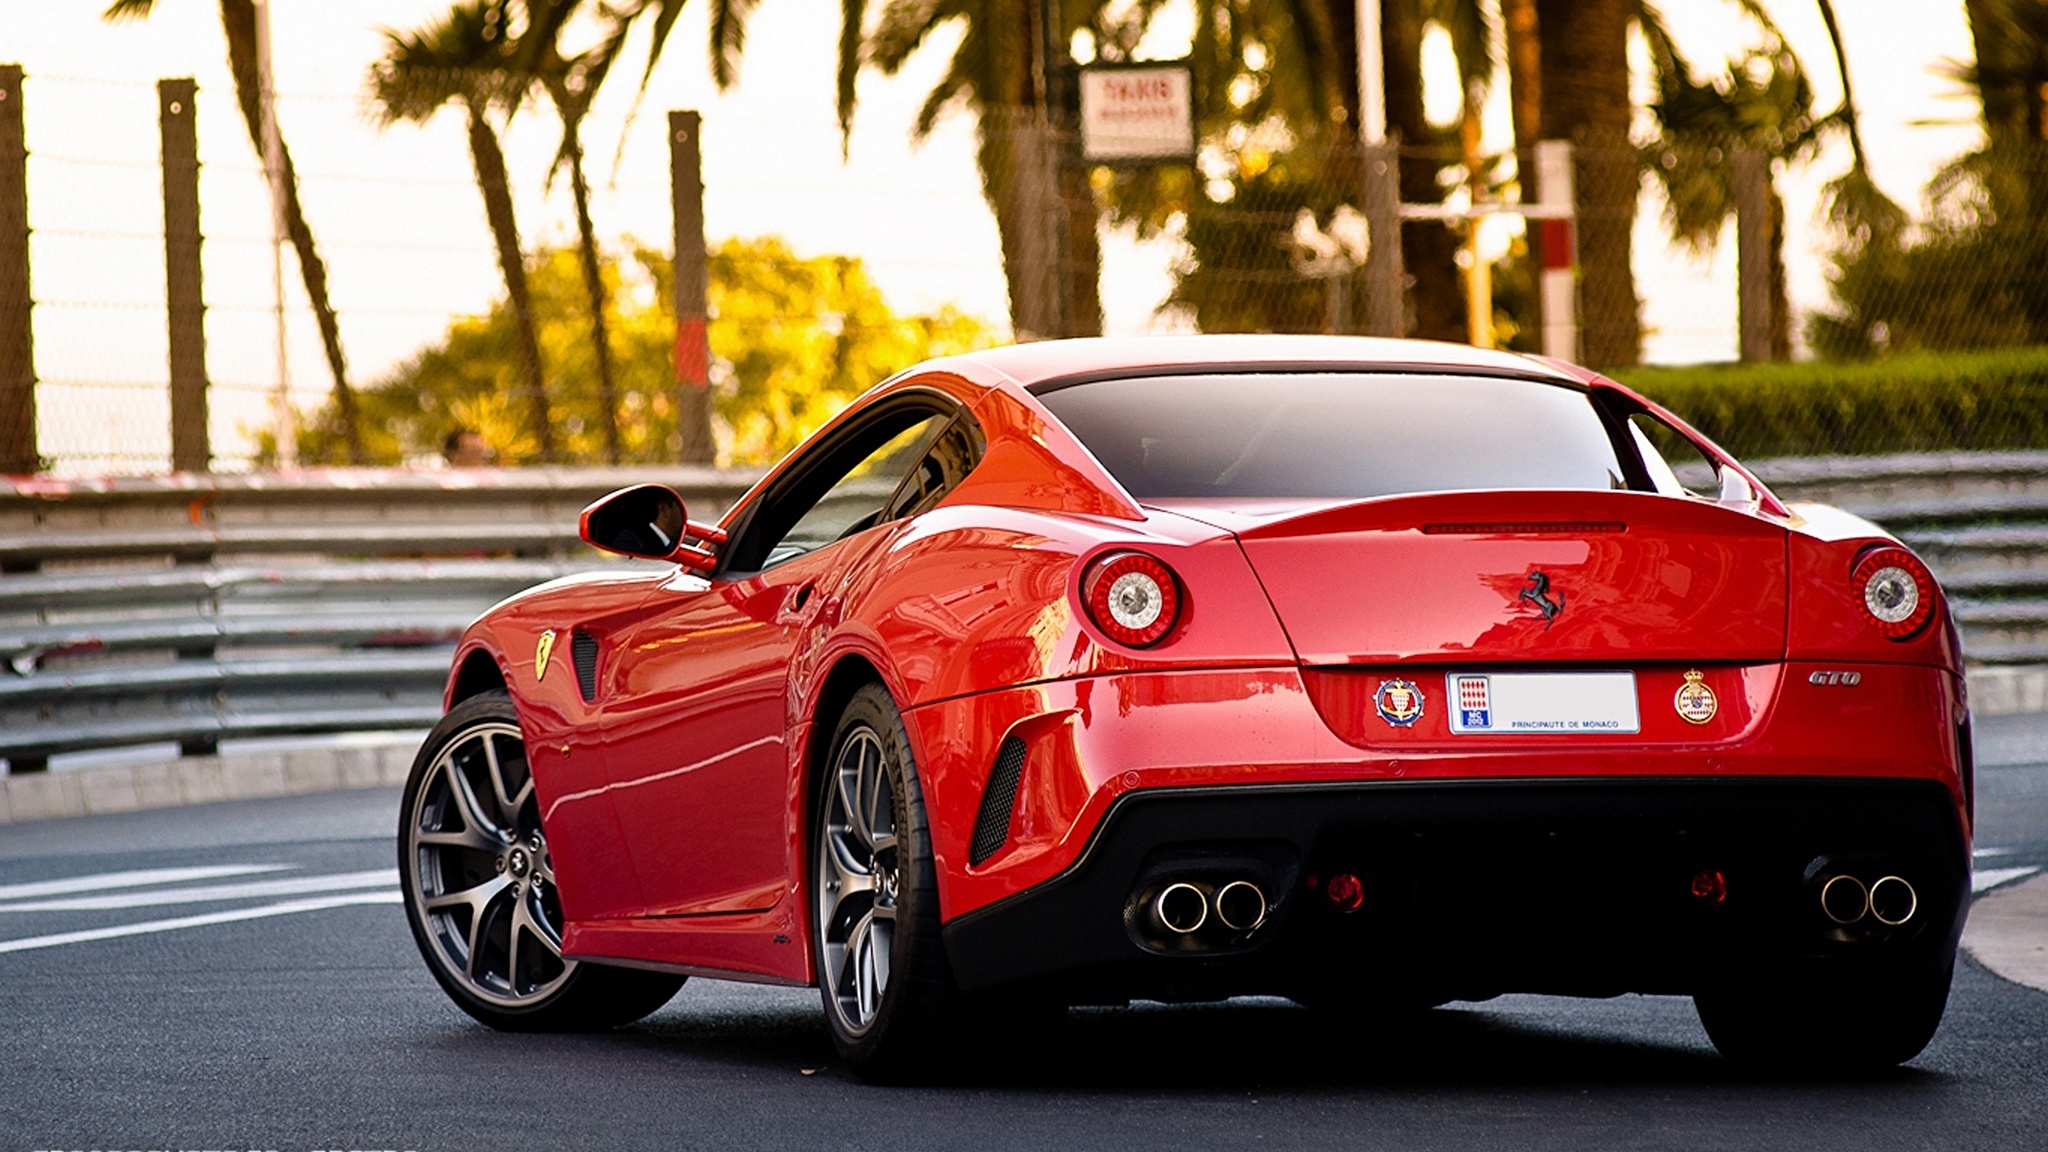 Красный спорткар. Ferrari 599 GTO. Ferrari 599 GTB. Ferrari 599 GTO Red. Ferrari 599 GTO Black.